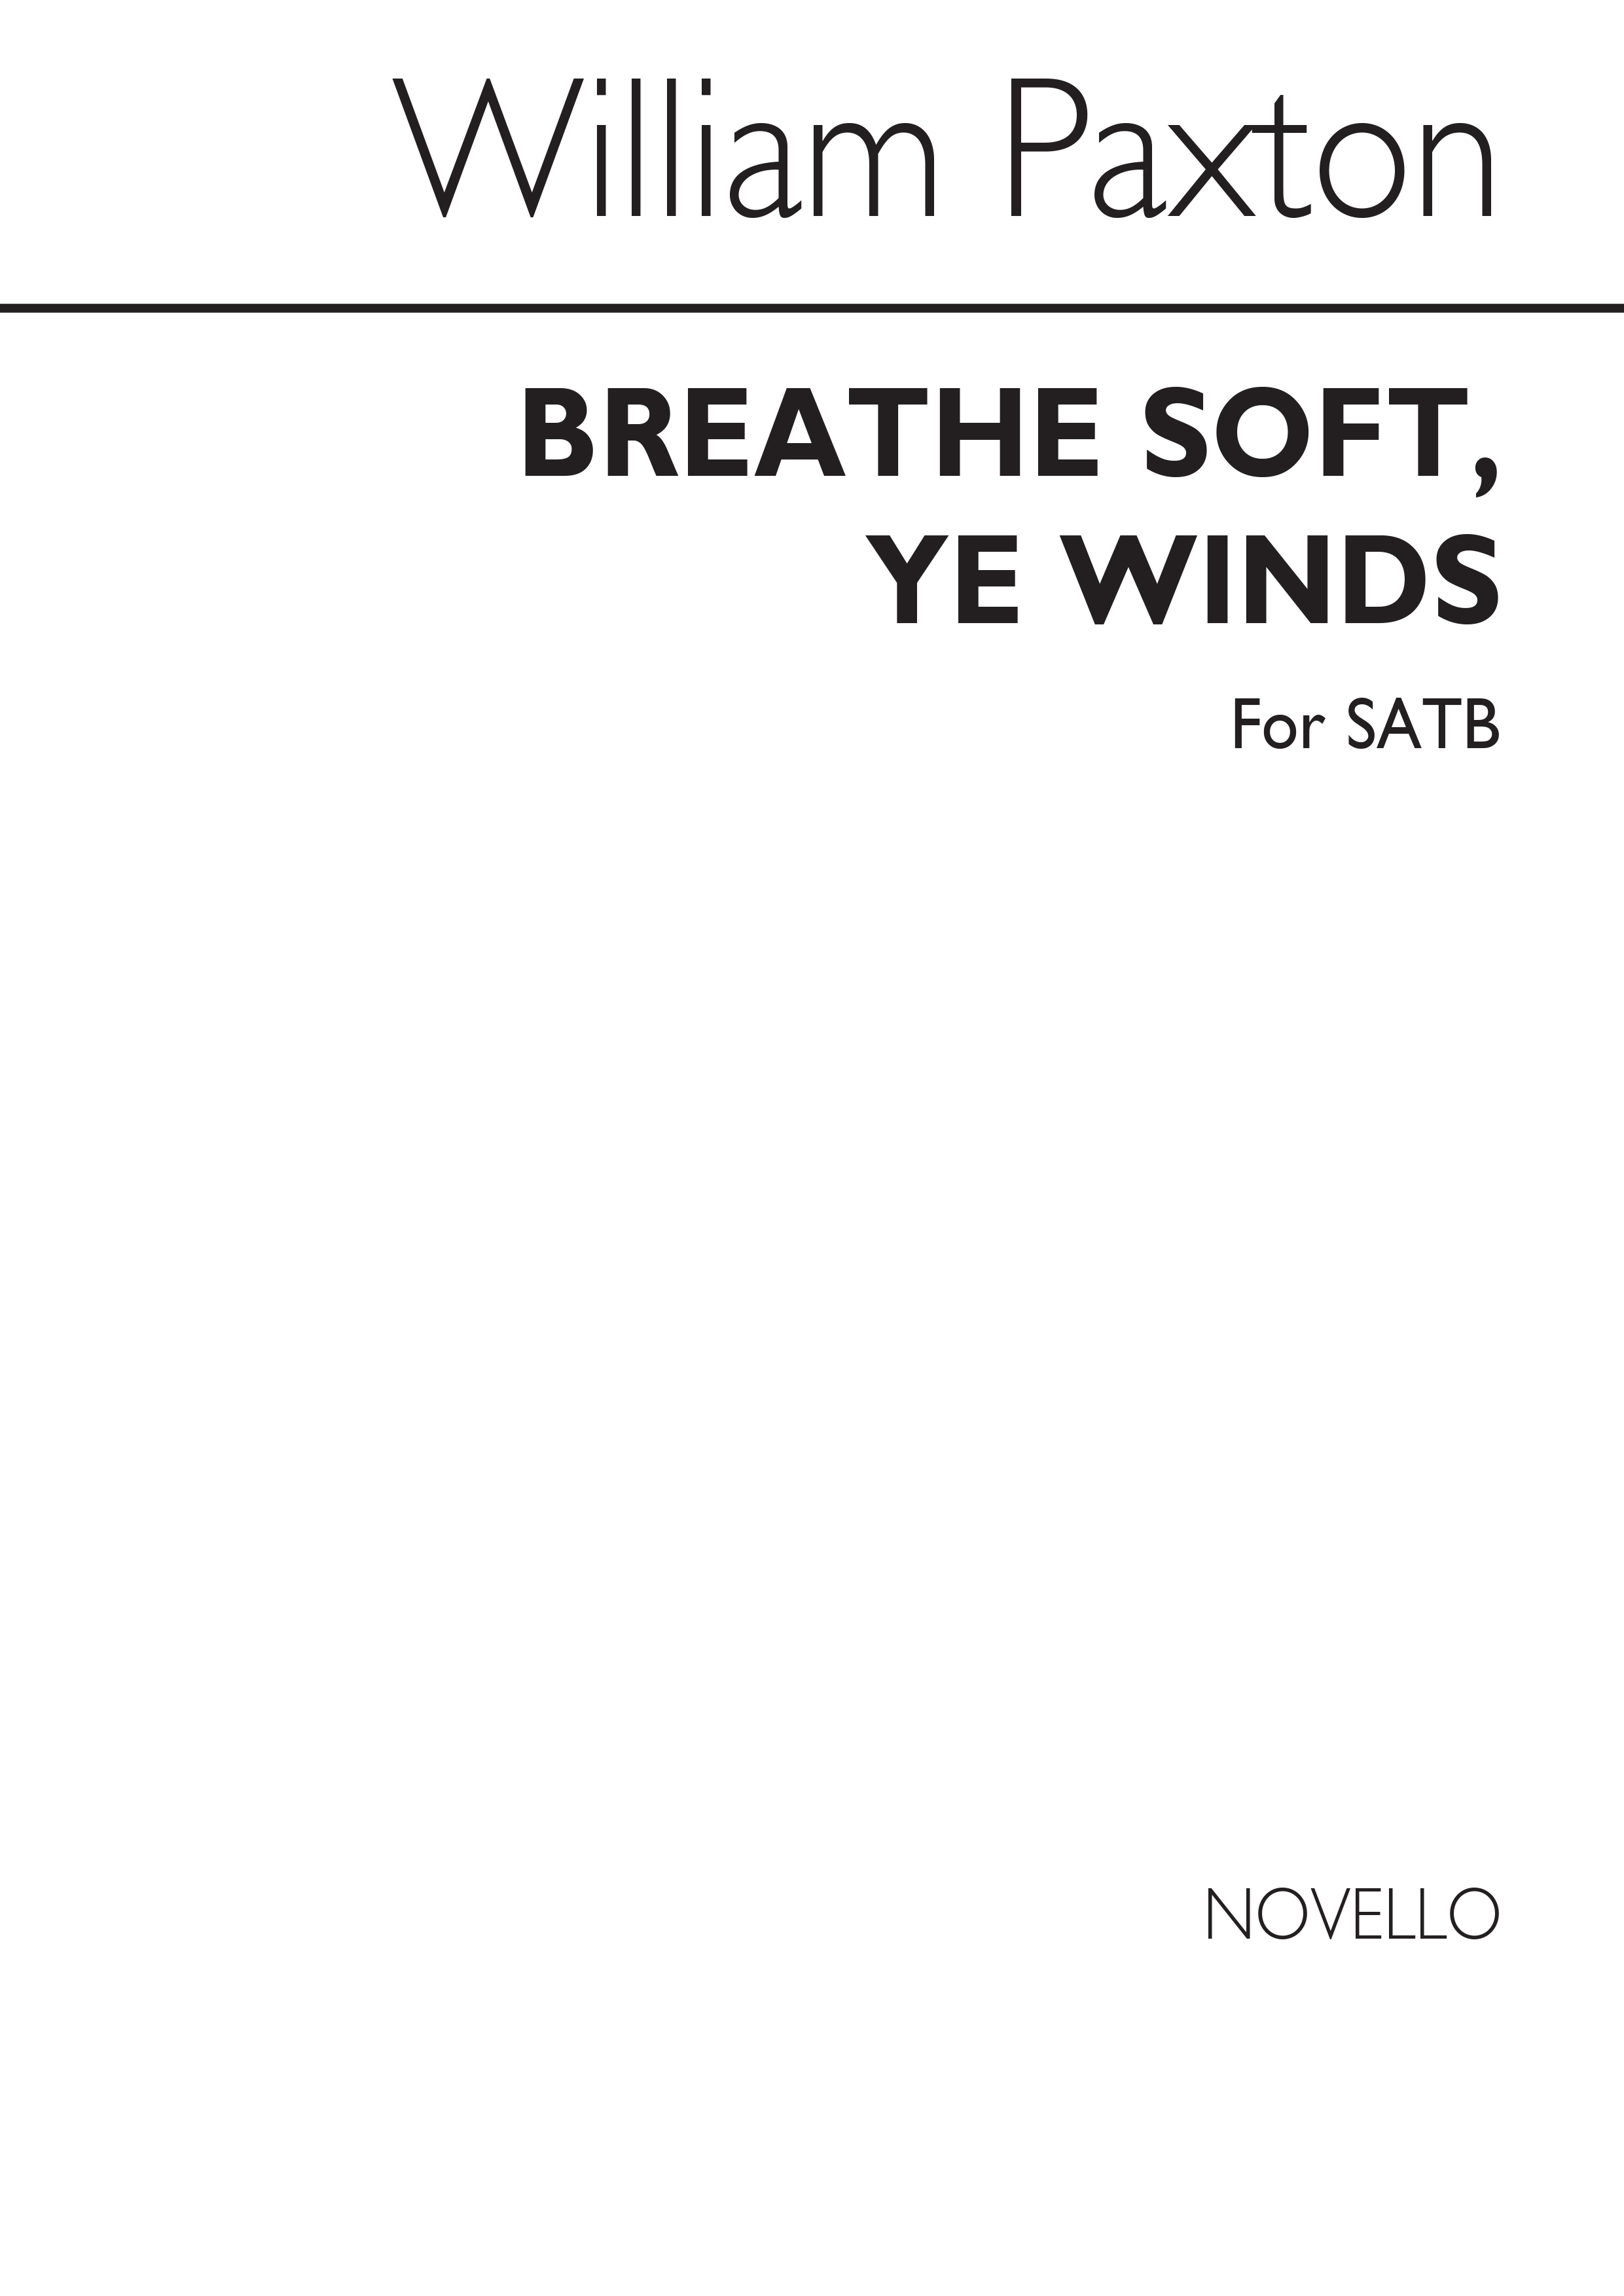 William Paxton: Breathe Soft ye Winds Satb: SATB: Vocal Score